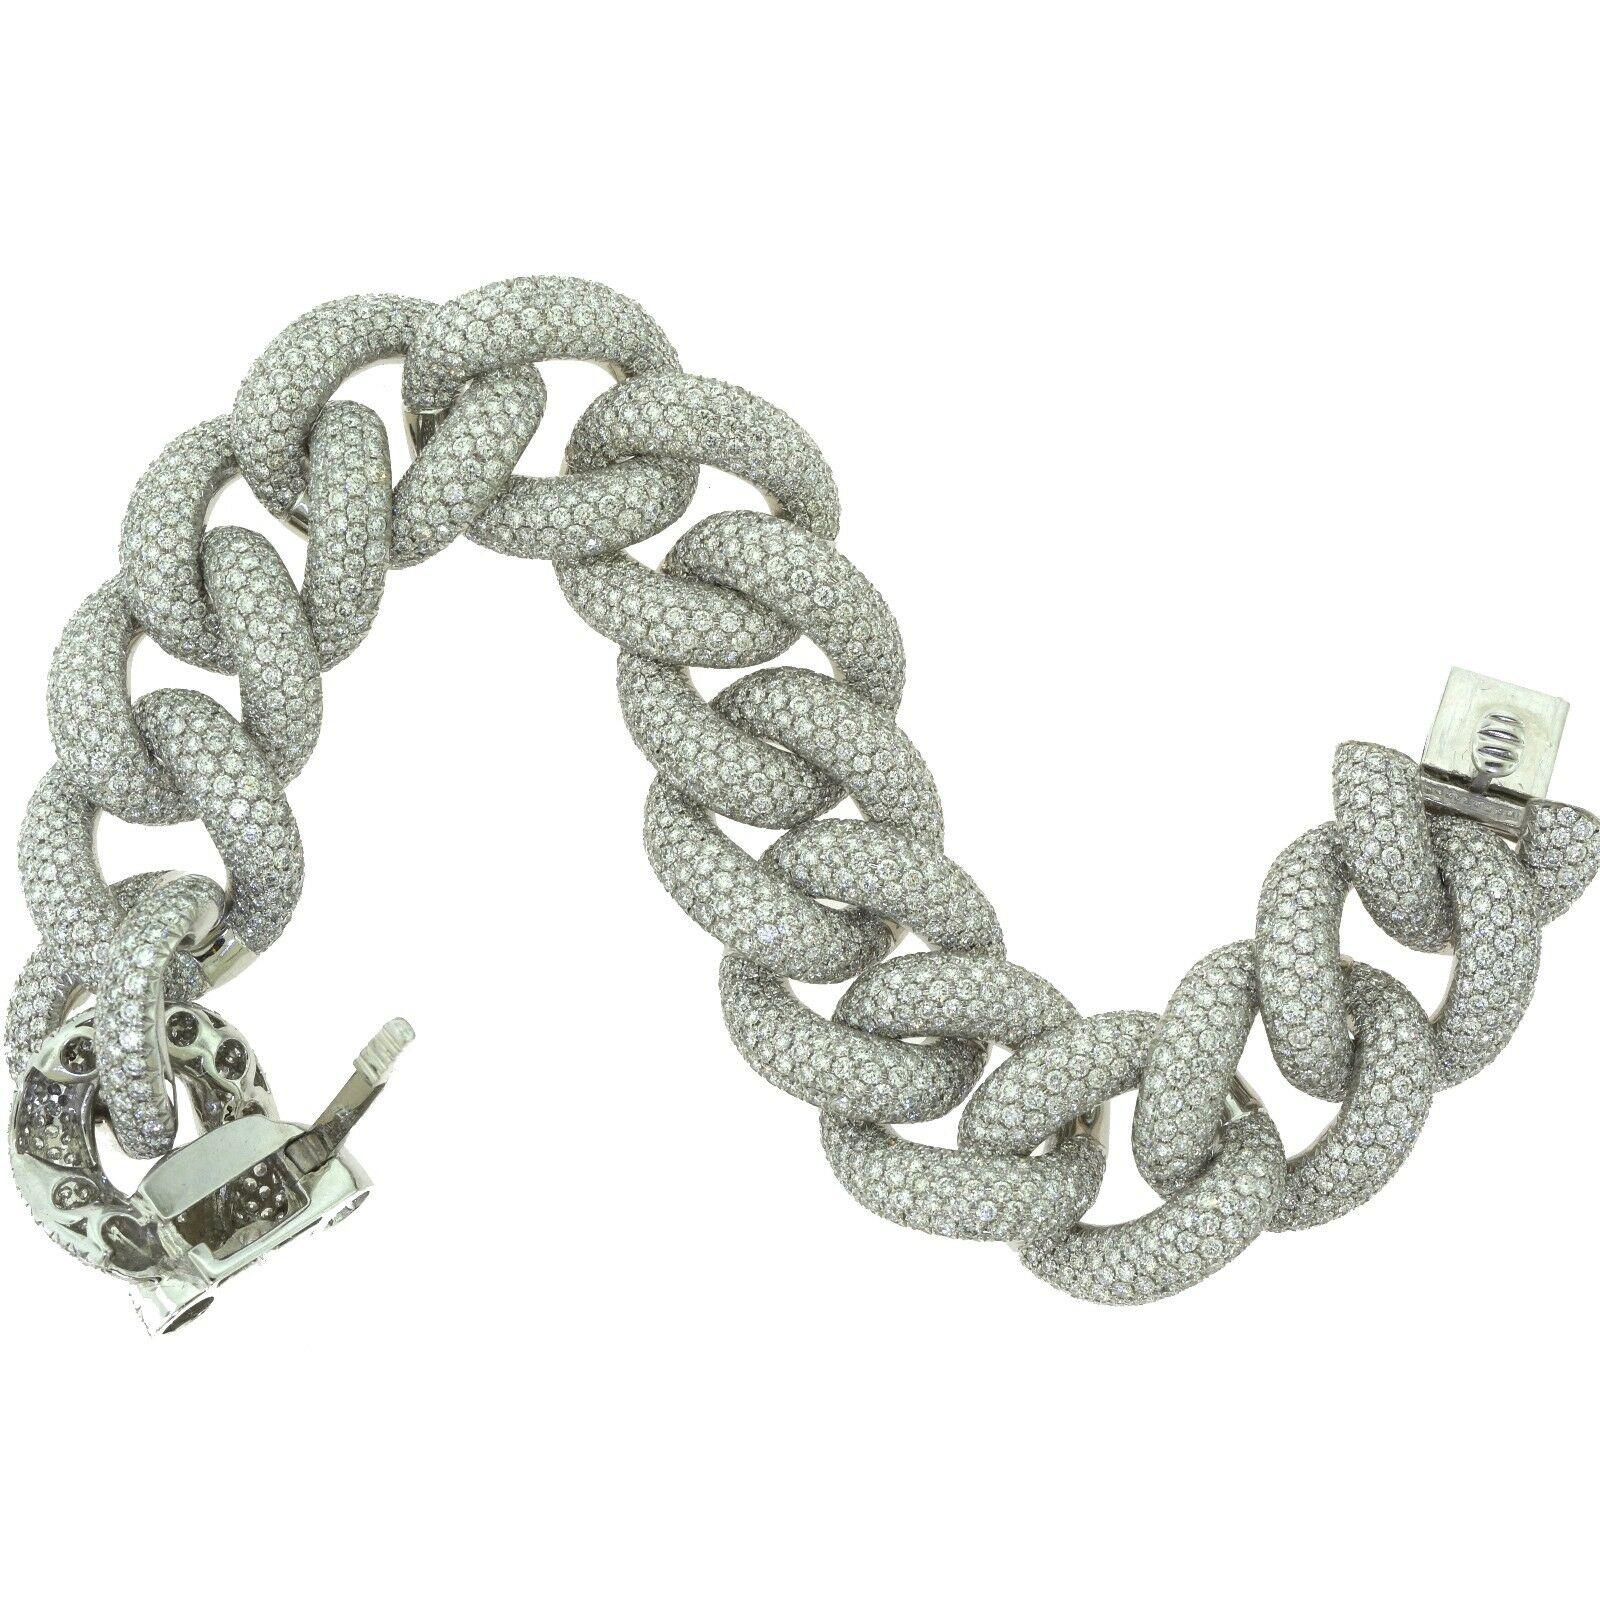 22.21 Carat Diamond-Paved Chain Link Bracelet in White Gold 1